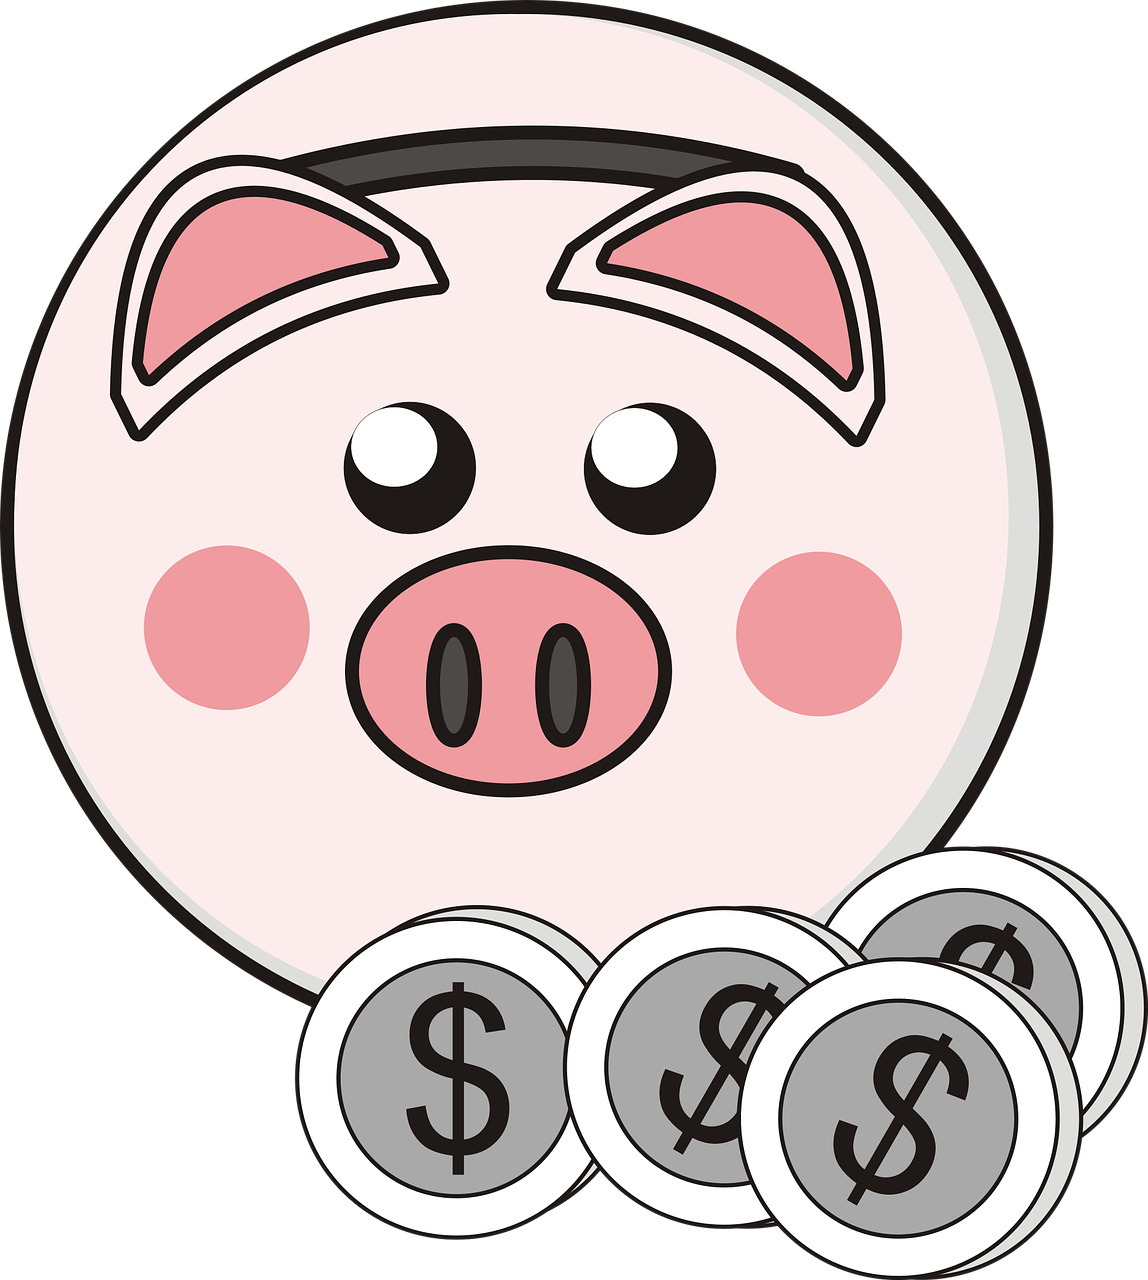 Piggy Bank 4 Coins Clipart icons